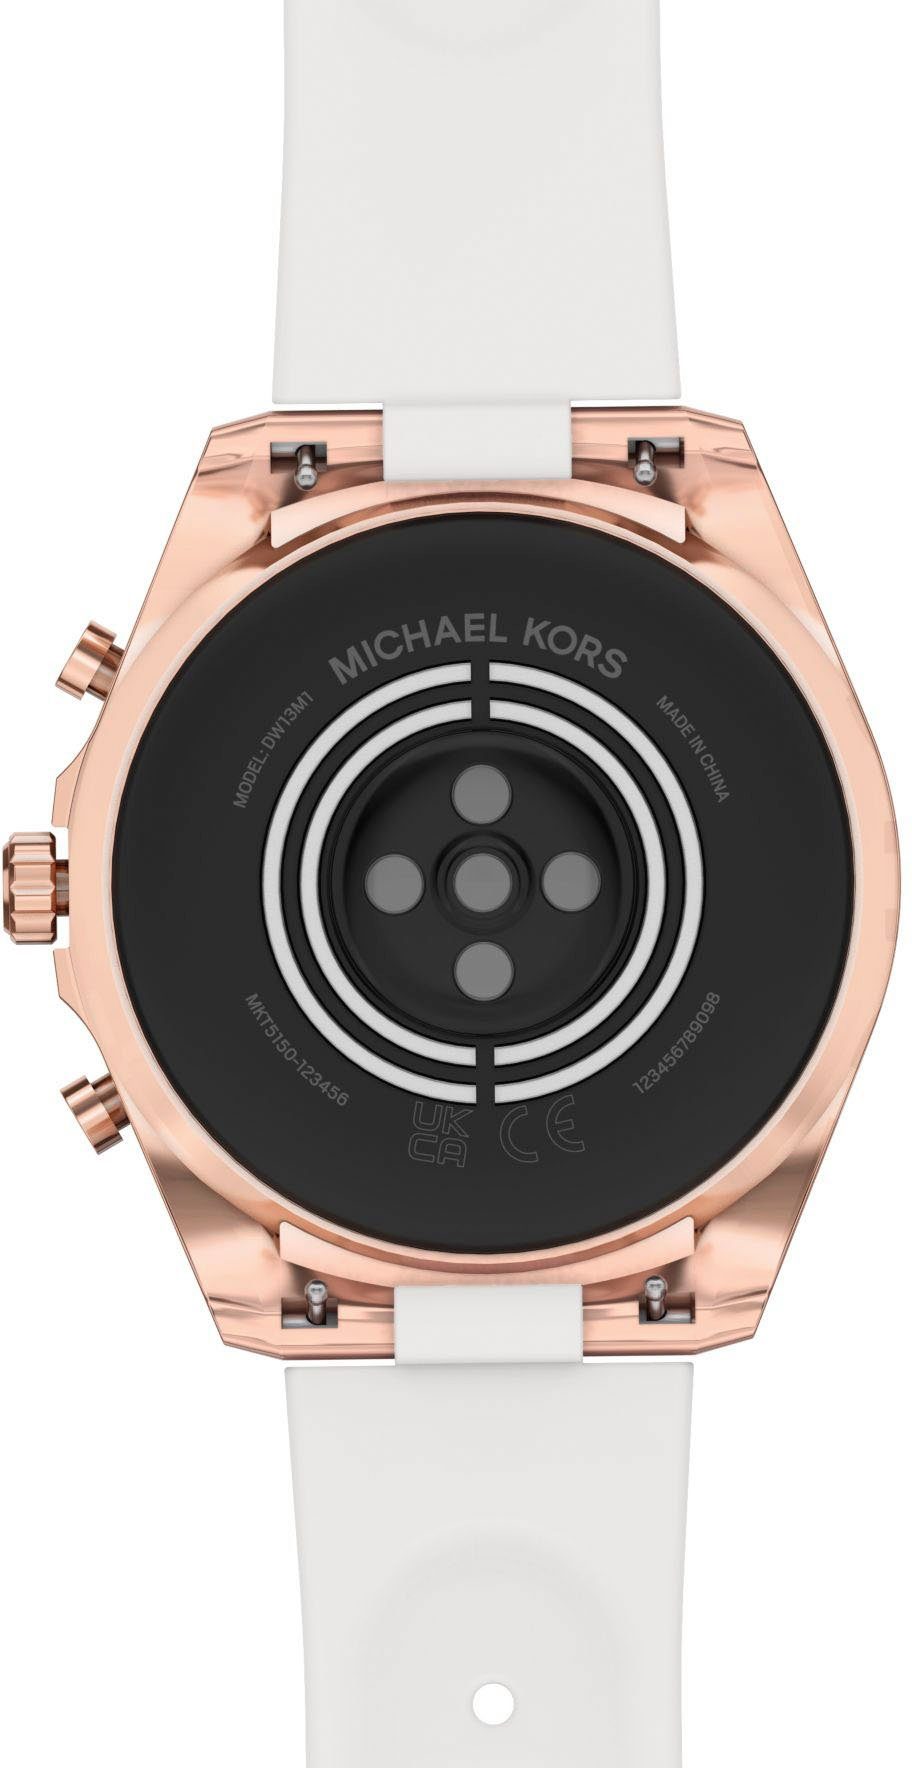 BRADSHAW, MKT5153 KORS by Google) 6 Smartwatch ACCESS (Wear GEN OS MICHAEL